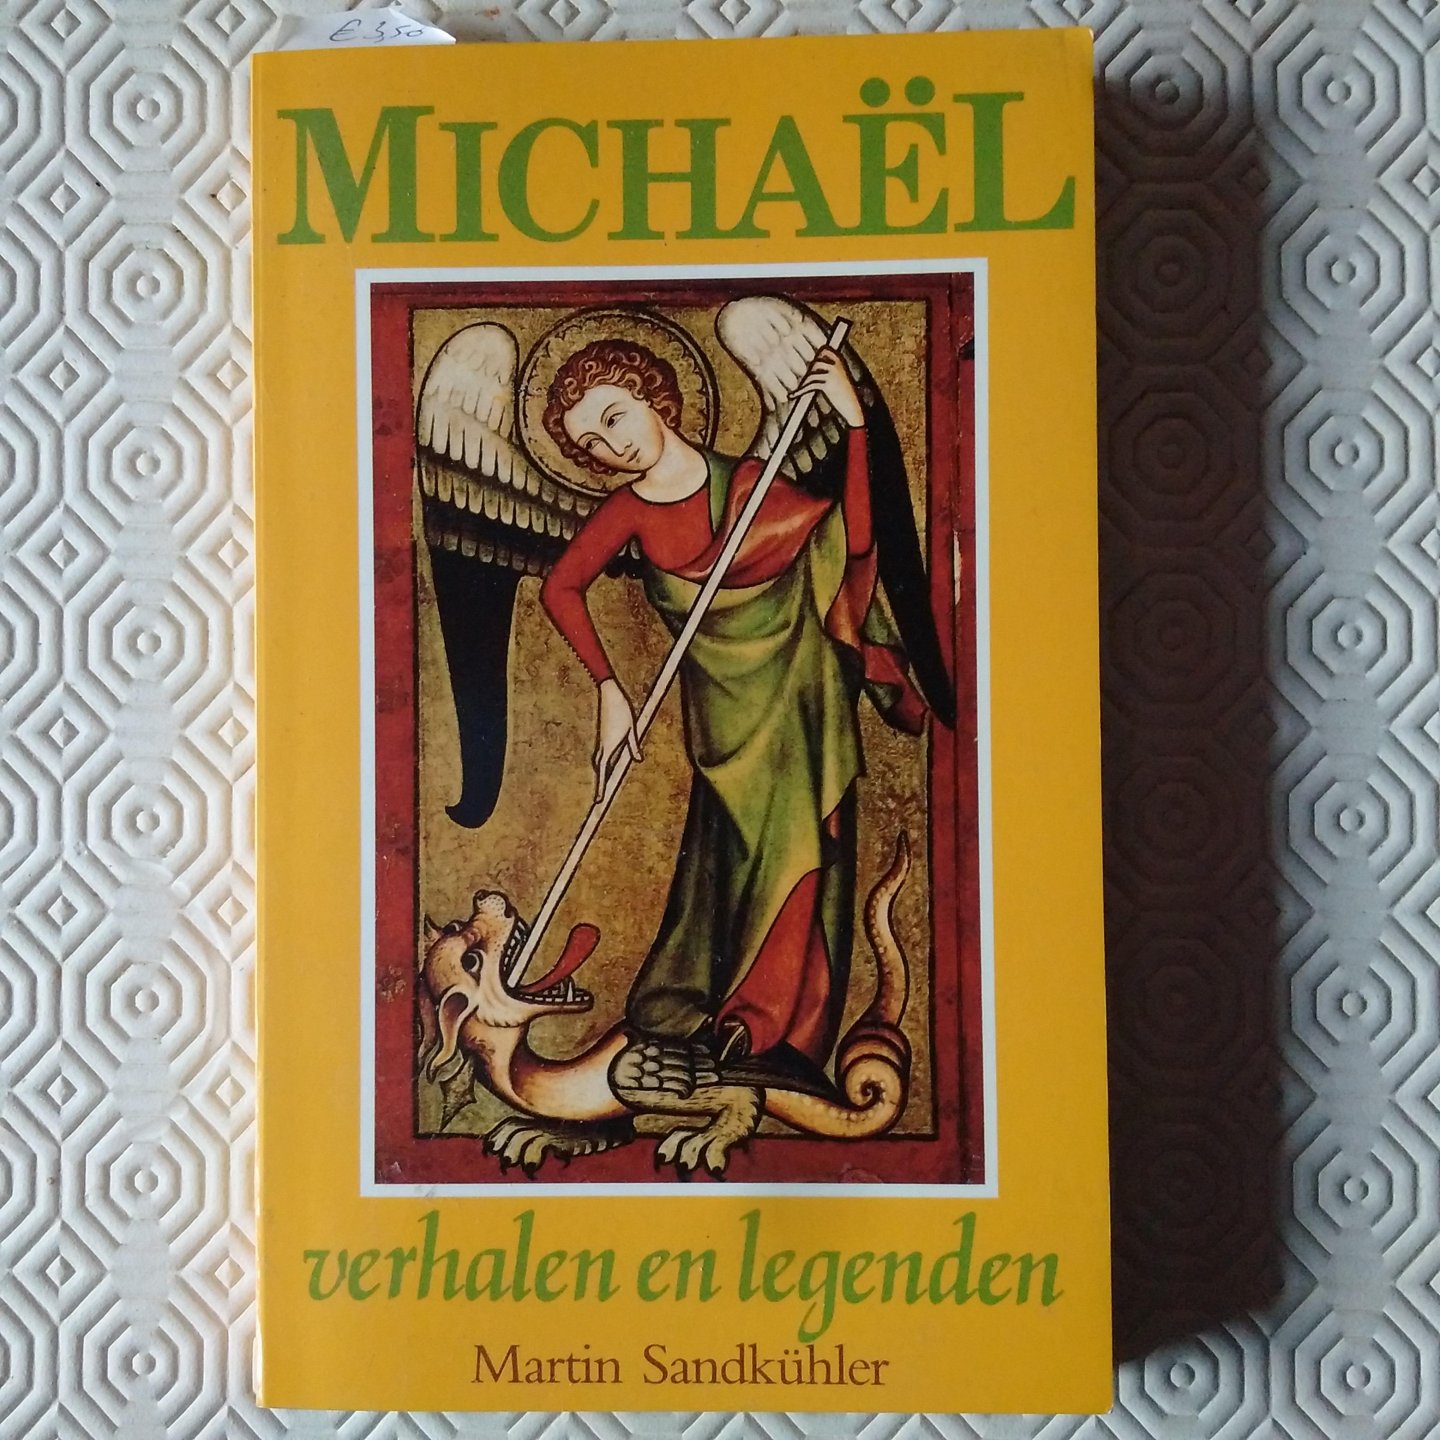 Sandkühler, Martin - Michaël, verhalen en legenden